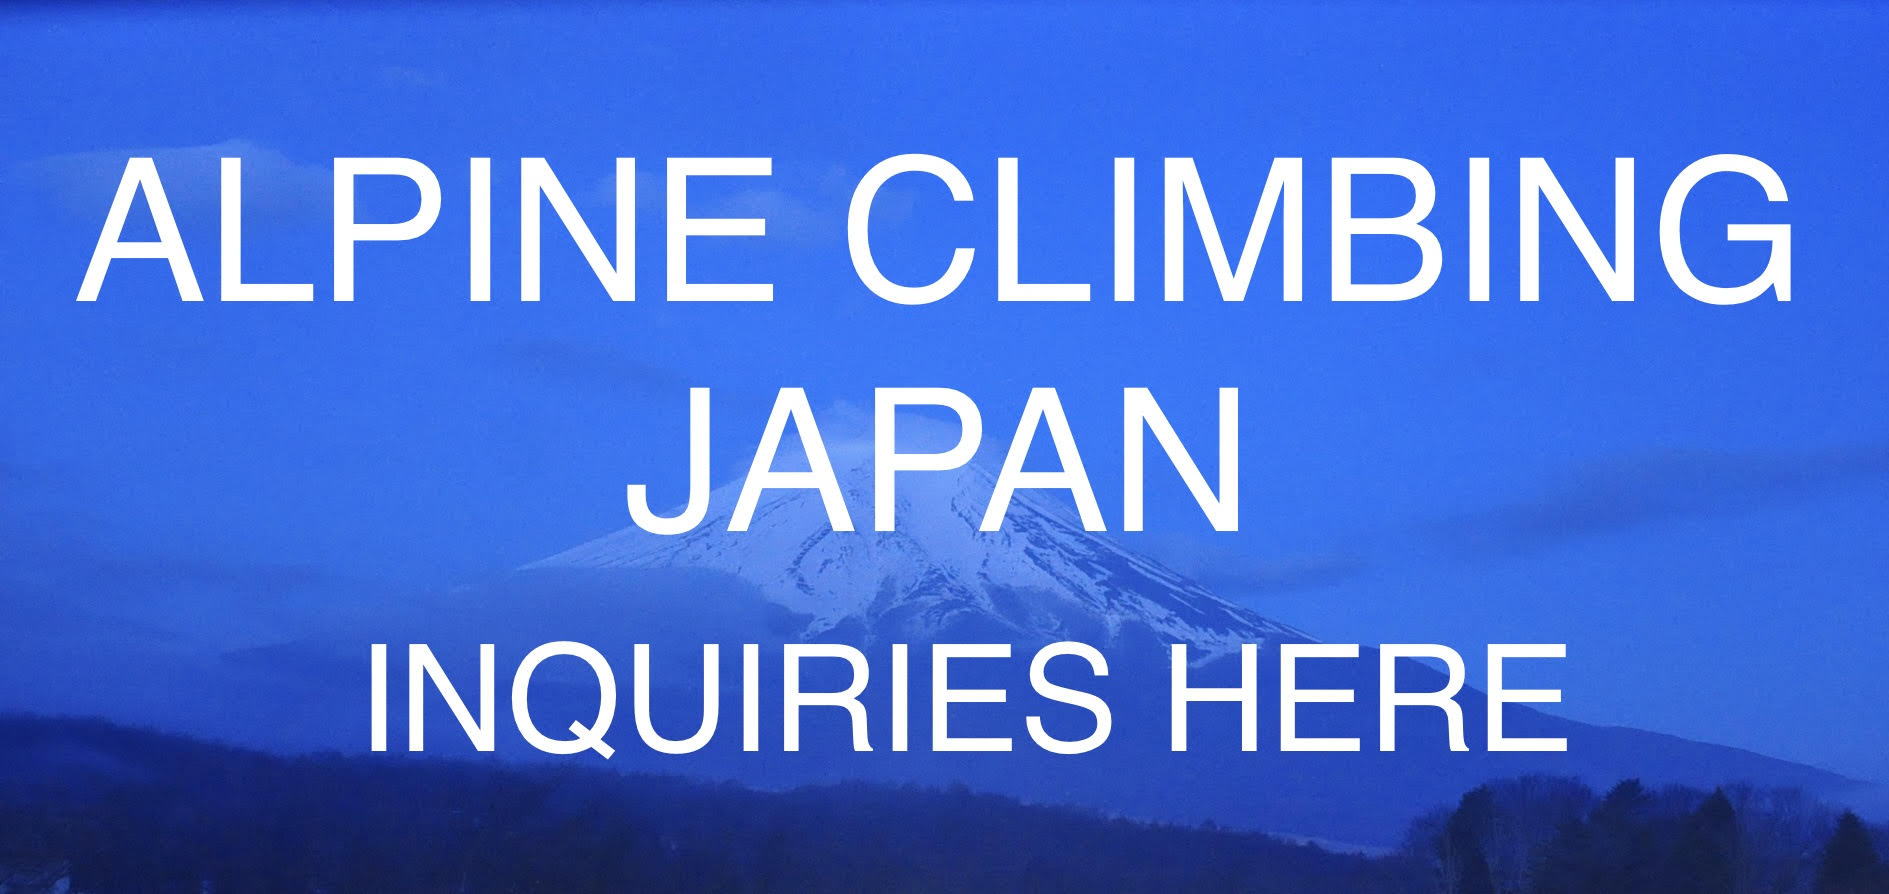 ALPINE CLIMBING JAPAN INQUIRIES